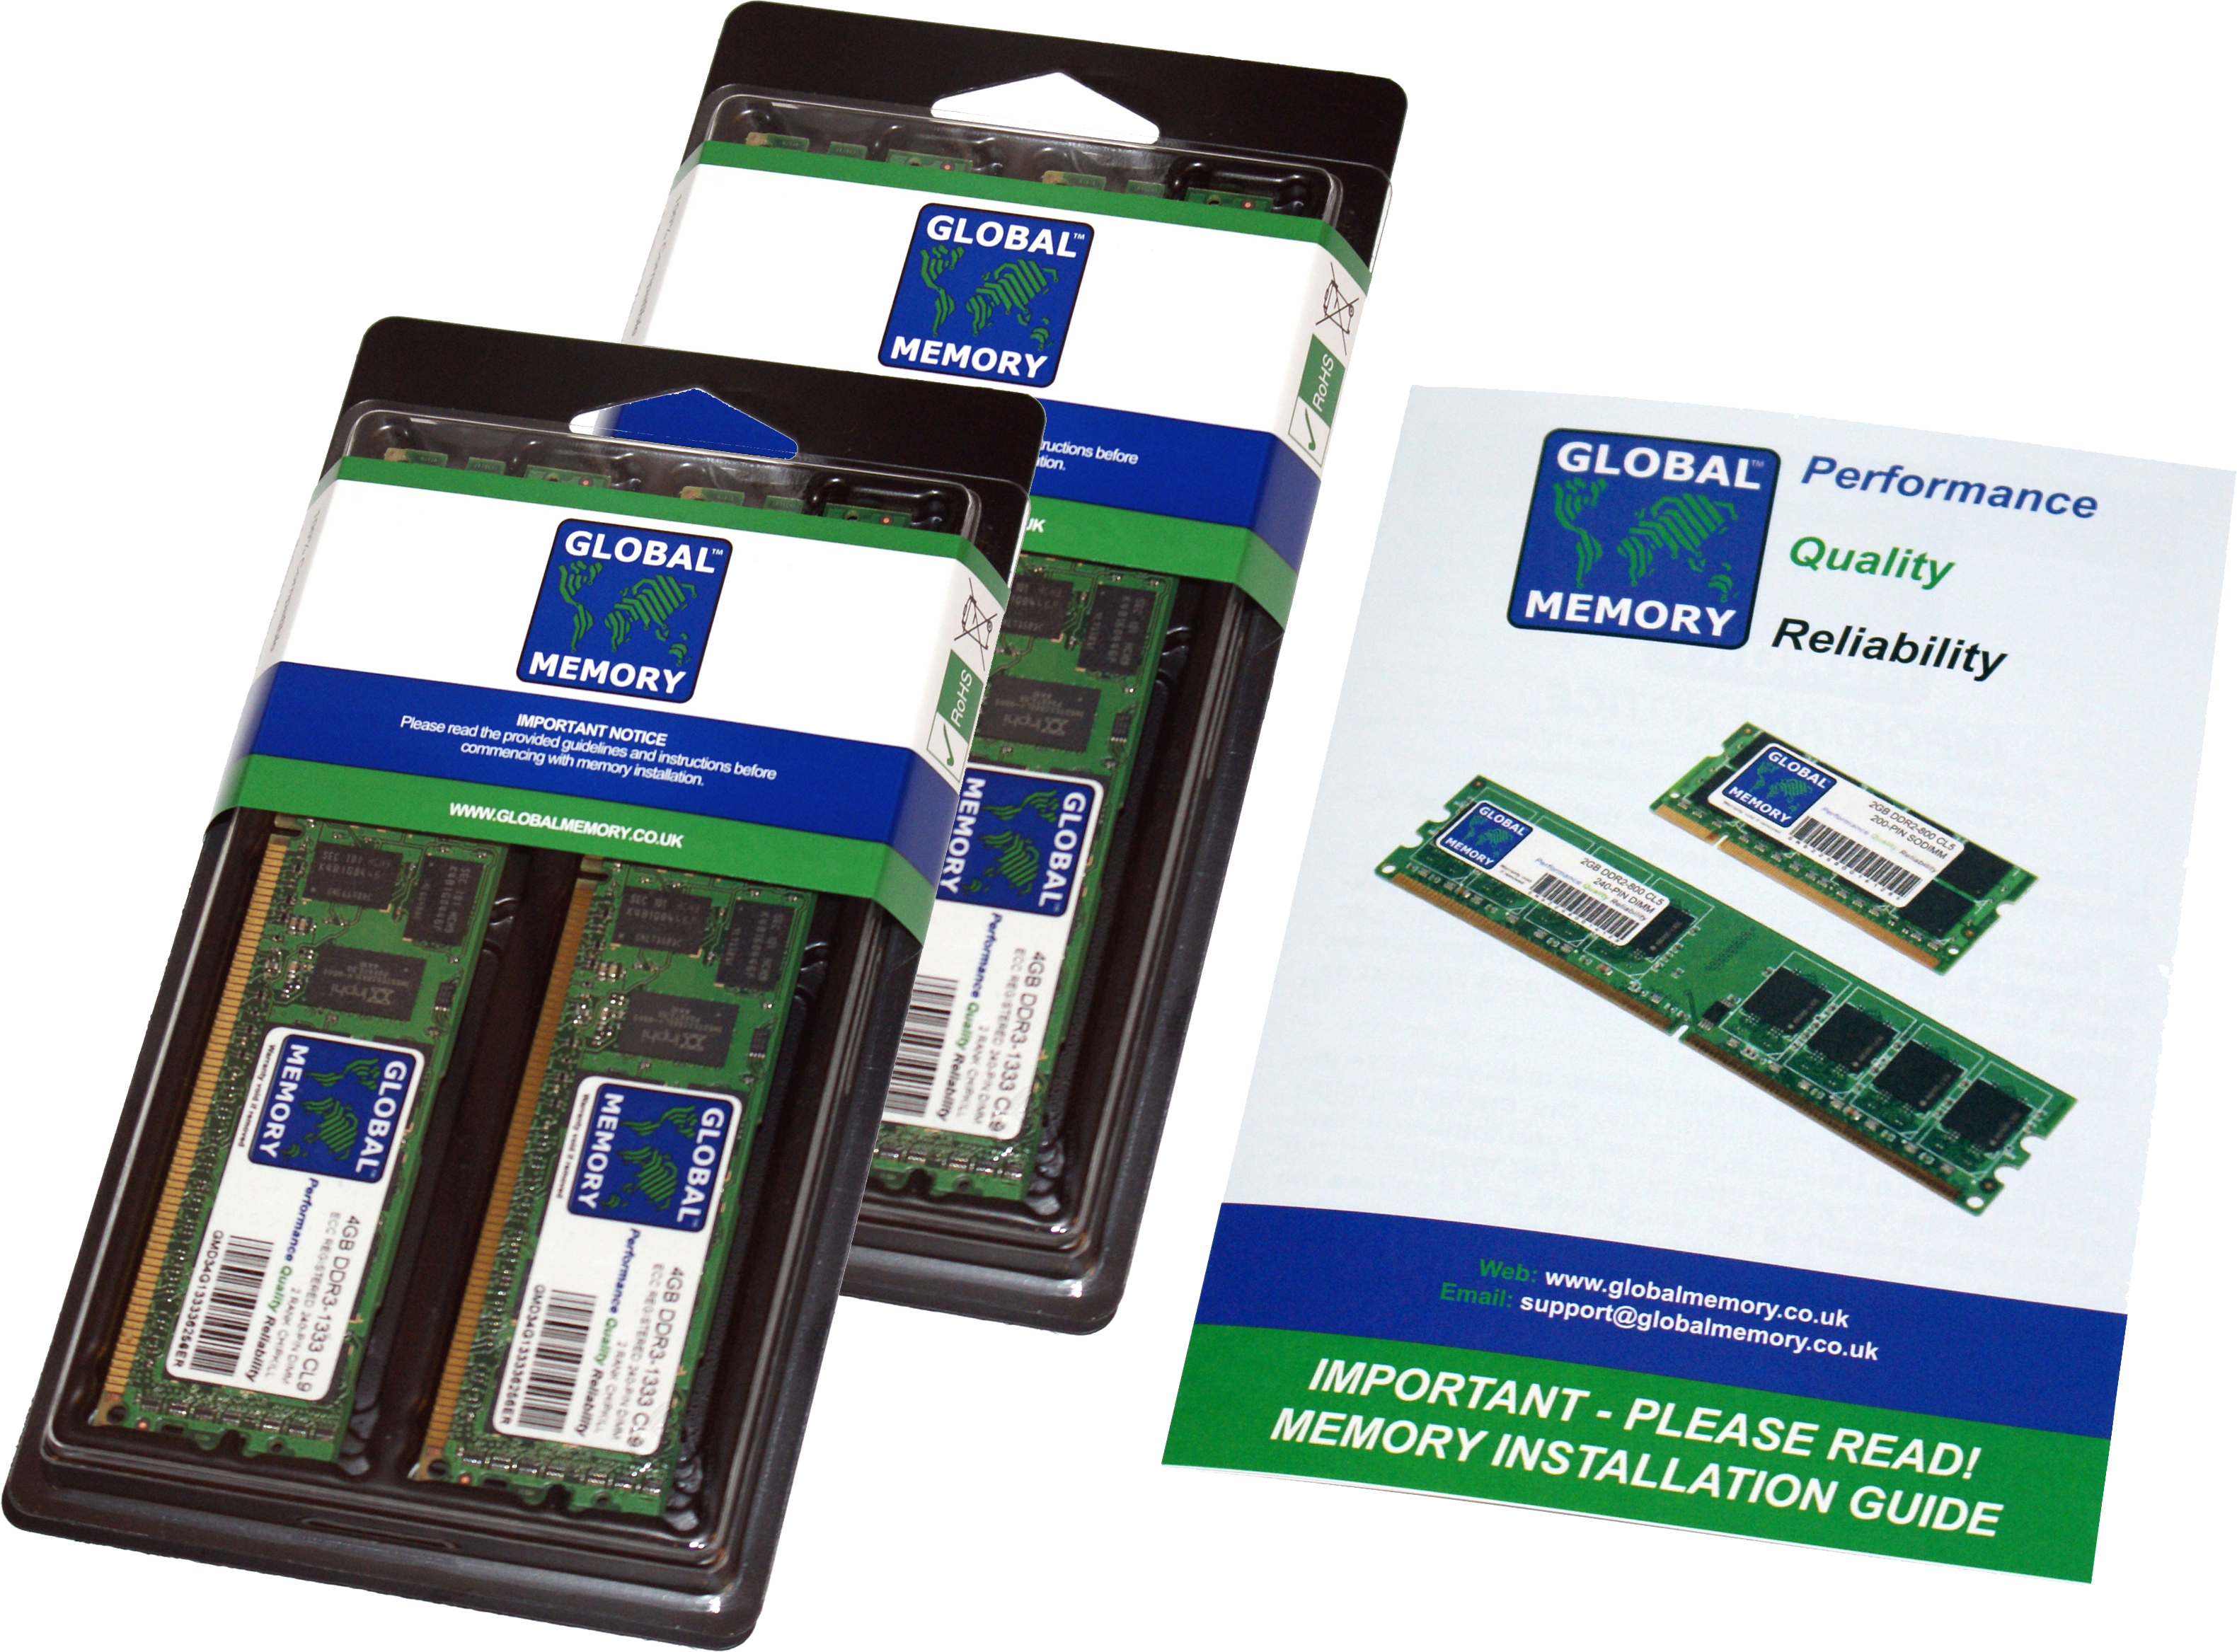 32GB (2 x 16GB) DDR4 2133MHz PC4-17000 288-PIN ECC REGISTERED DIMM (RDIMM) MEMORY RAM KIT FOR DELL SERVERS/WORKSTATIONS (4 RANK KIT CHIPKILL)